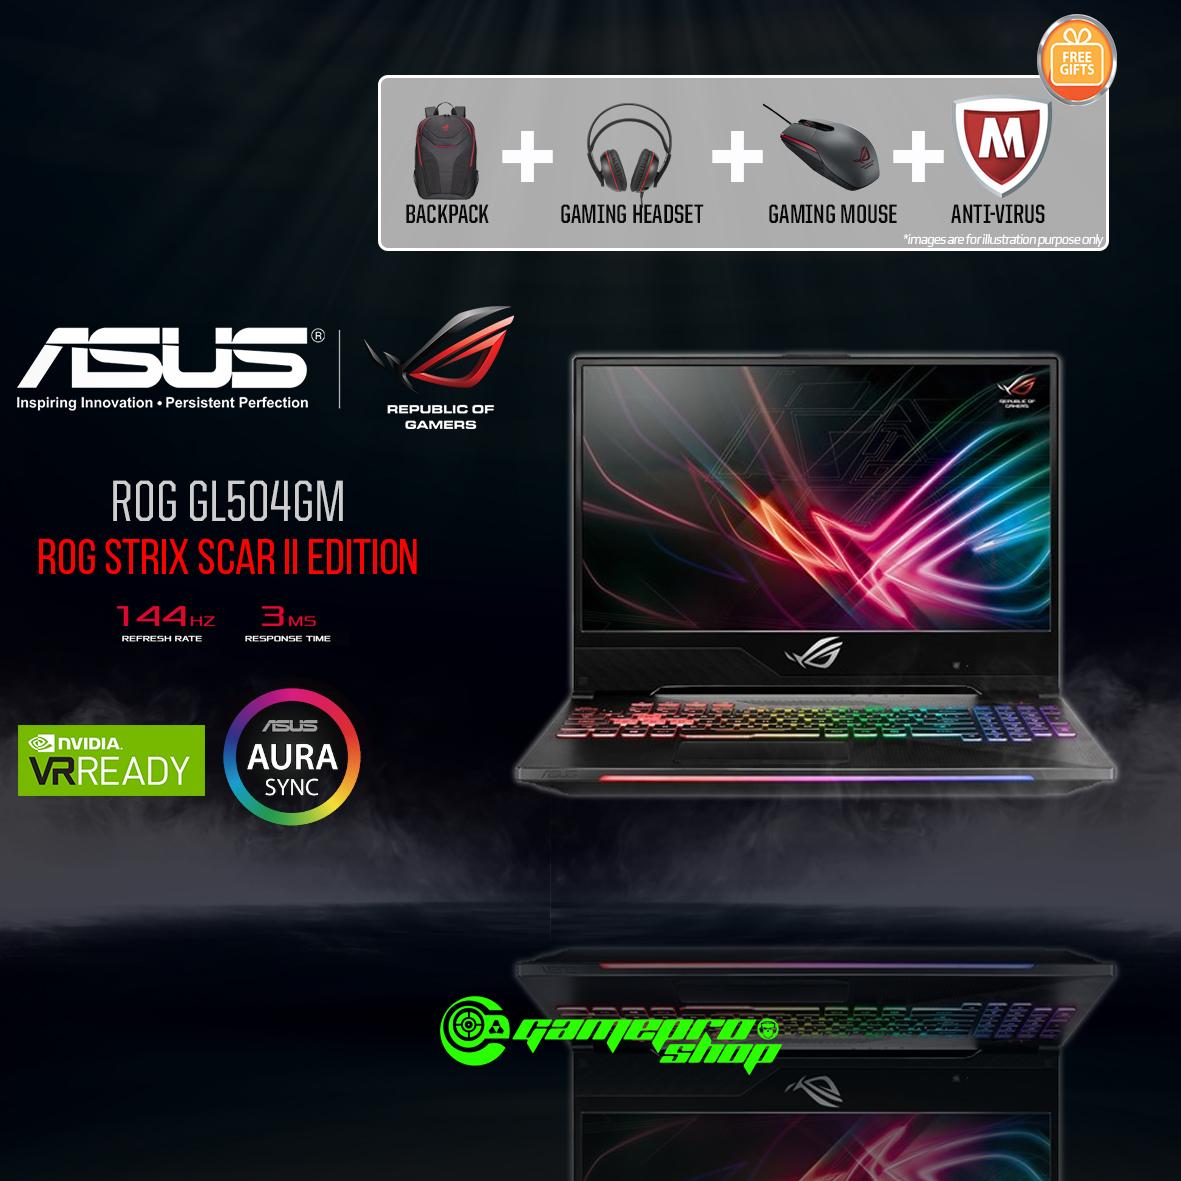 8th Gen ASUS ROG Strix SCAR II GL504GM – ES172T (8th-Gen/256GB SSD/GTX 1060 6GB GDDR5) 15.6″ With 144Hz Gaming Laptop *THE TECH SHOW PROMO*